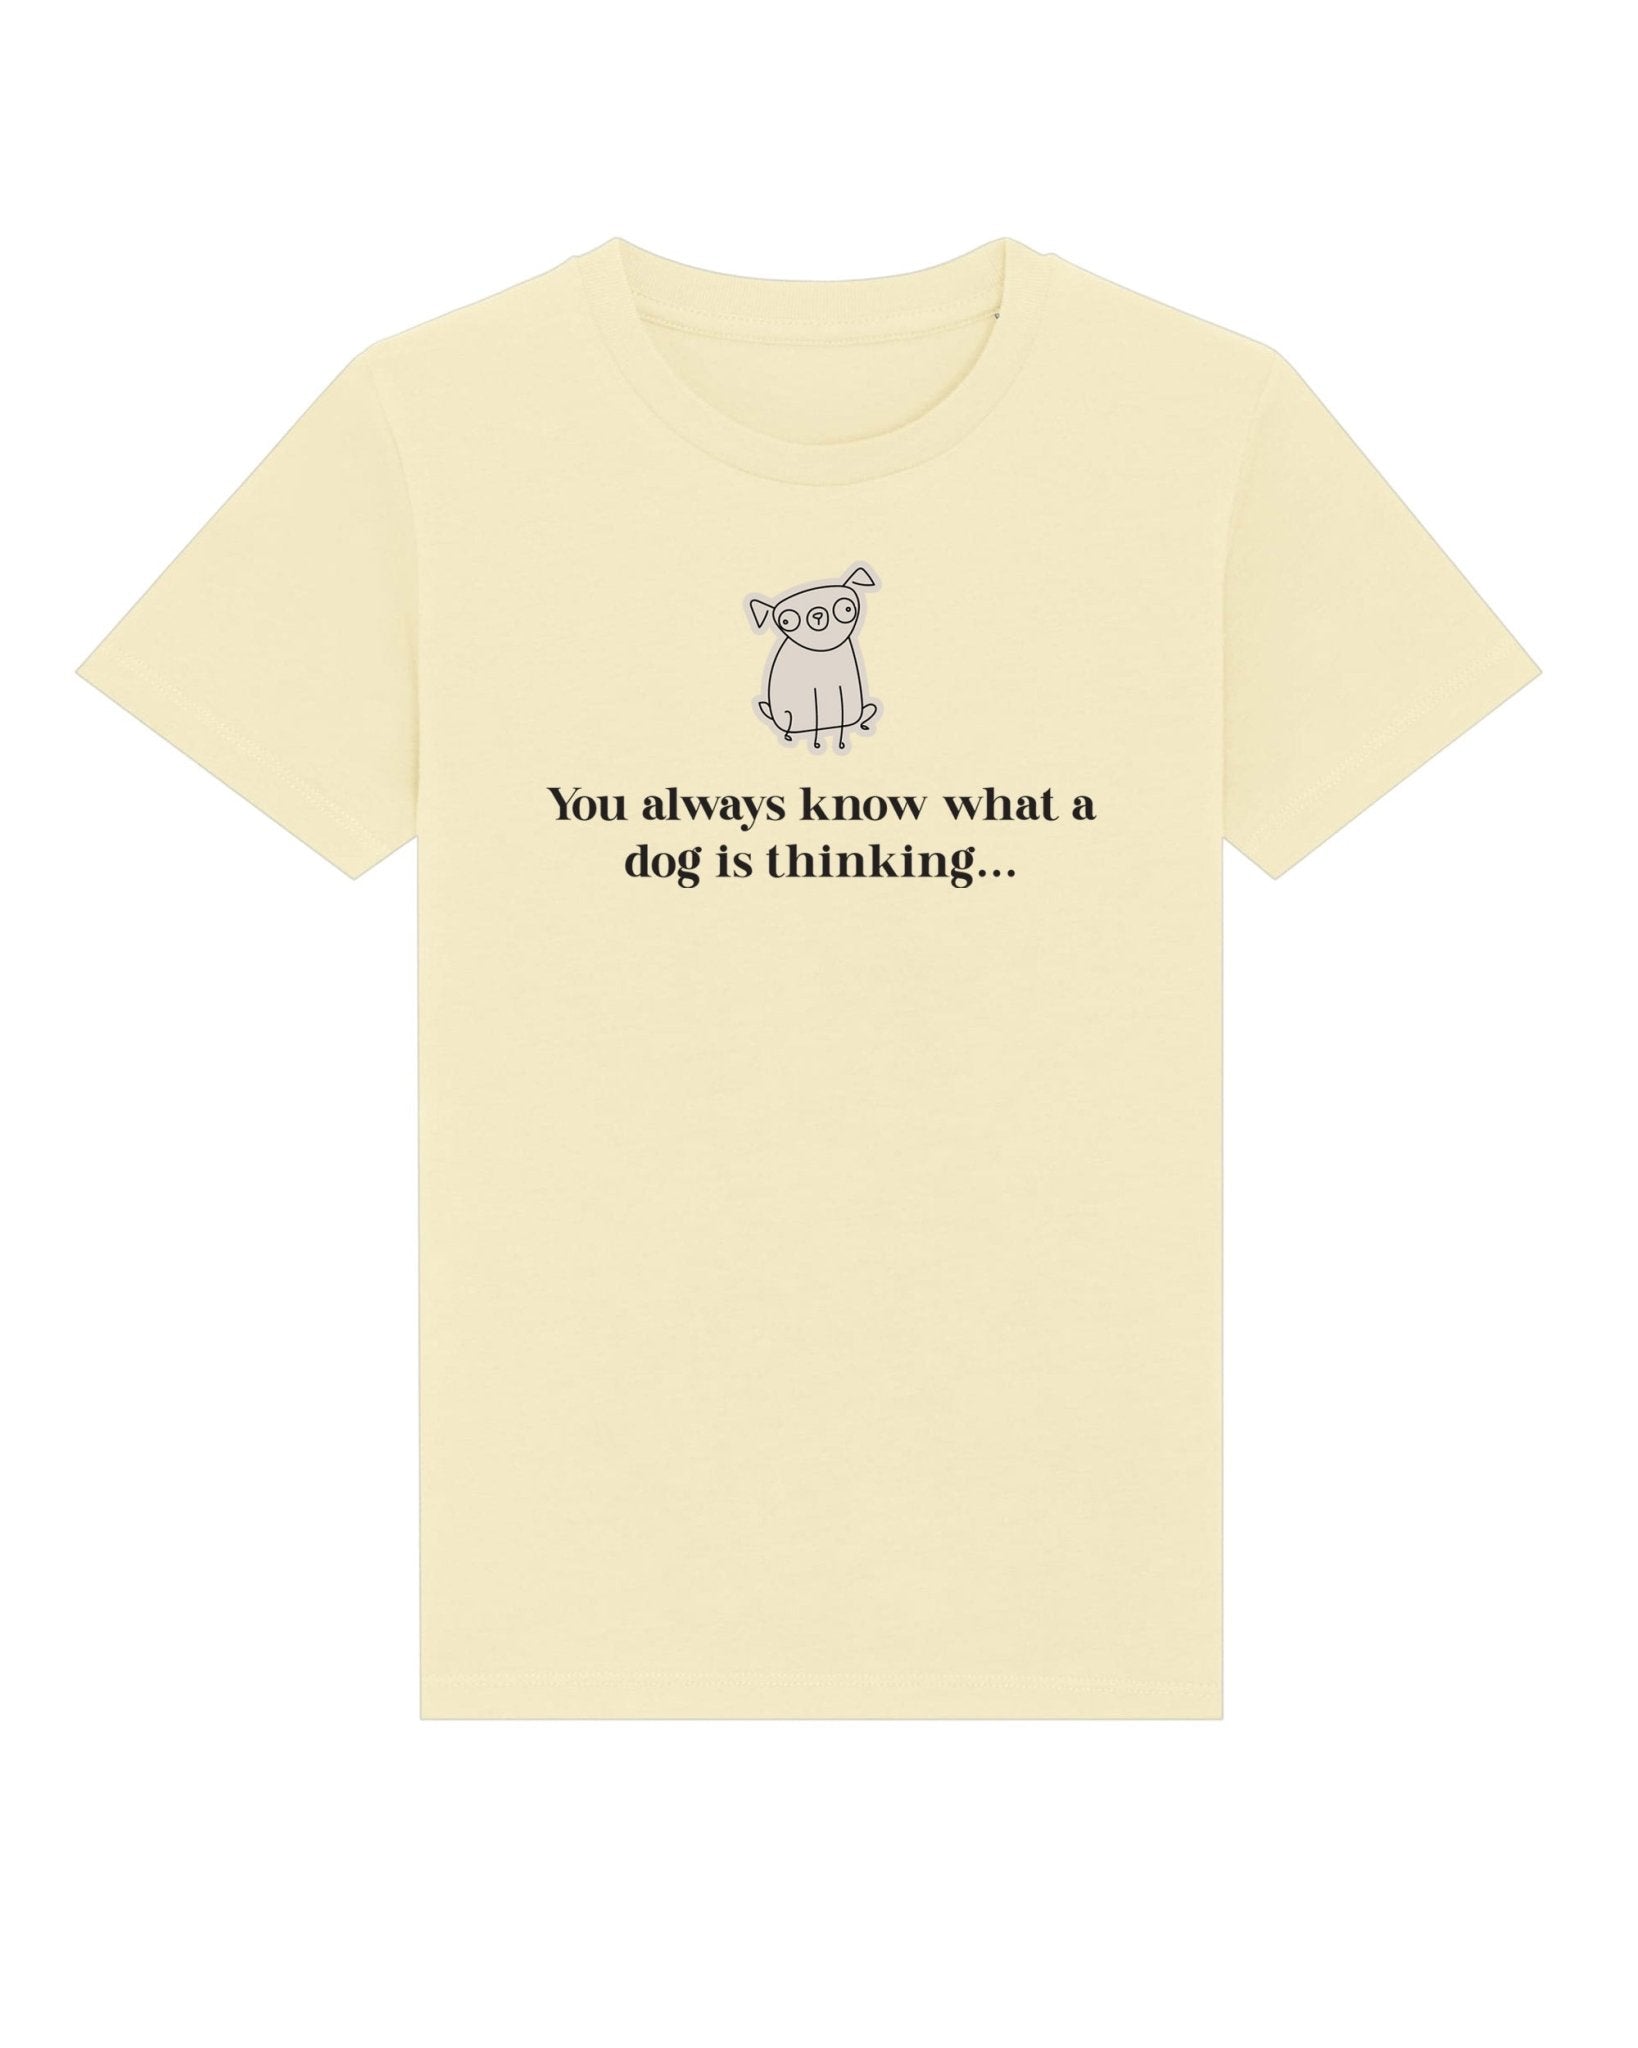 Organic Cotton 'The Psychic' Kids Funny Dog T-shirt - Funny Animal Shirt